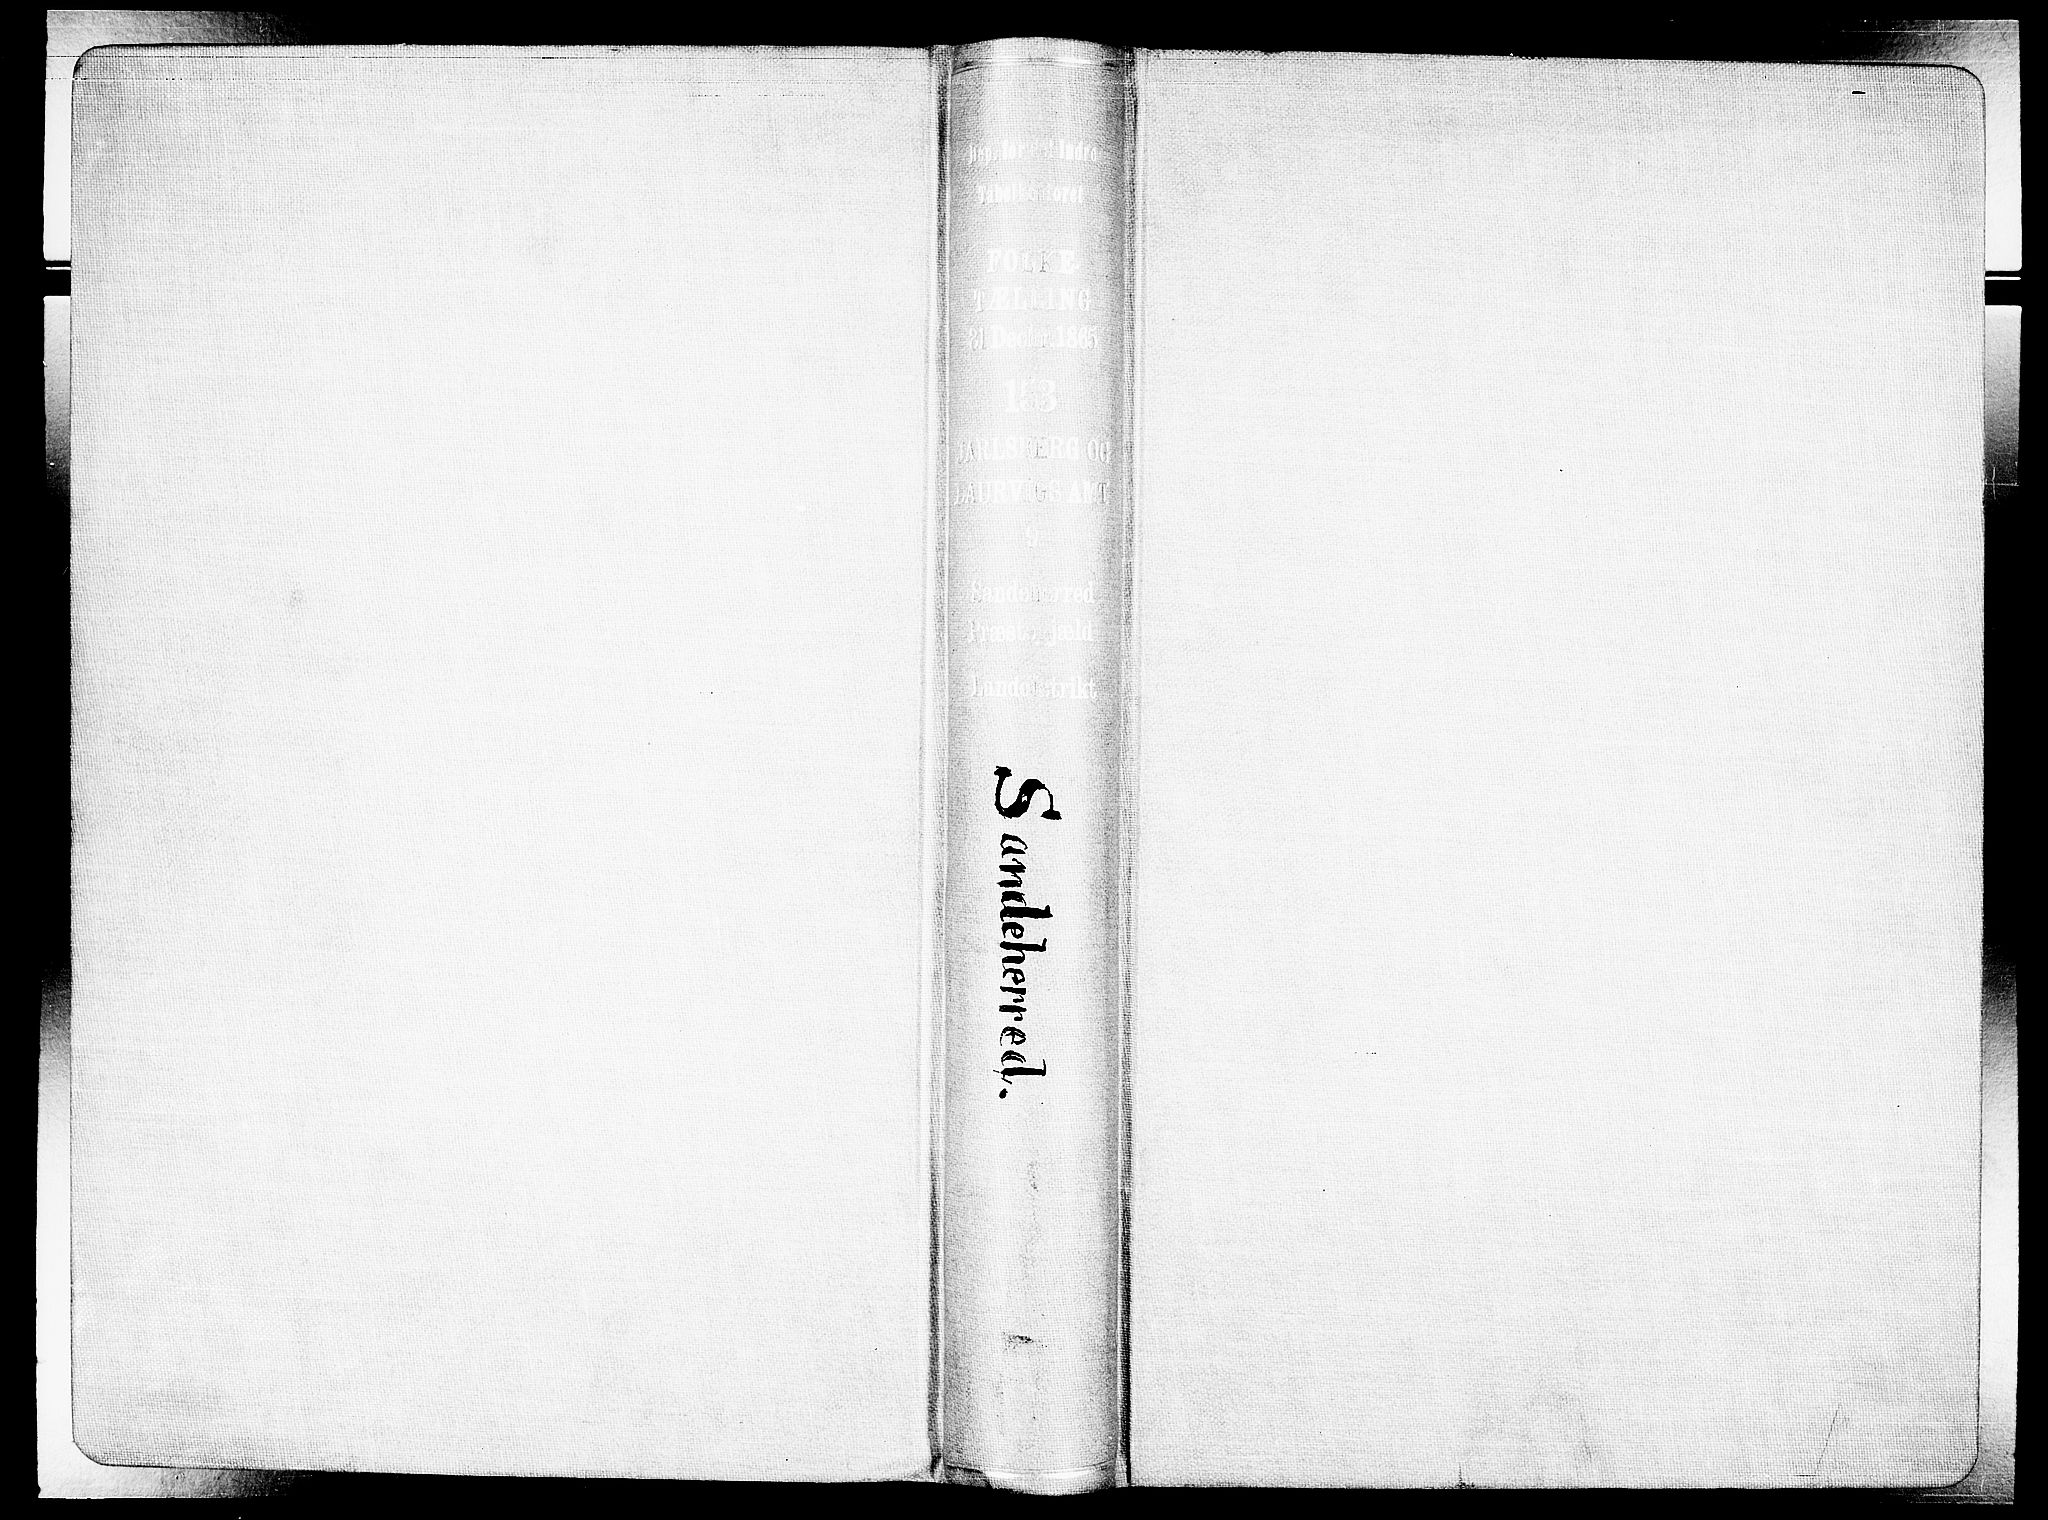 RA, Folketelling 1865 for 0724L Sandeherred prestegjeld, Sandeherred sokn, 1865, s. 2